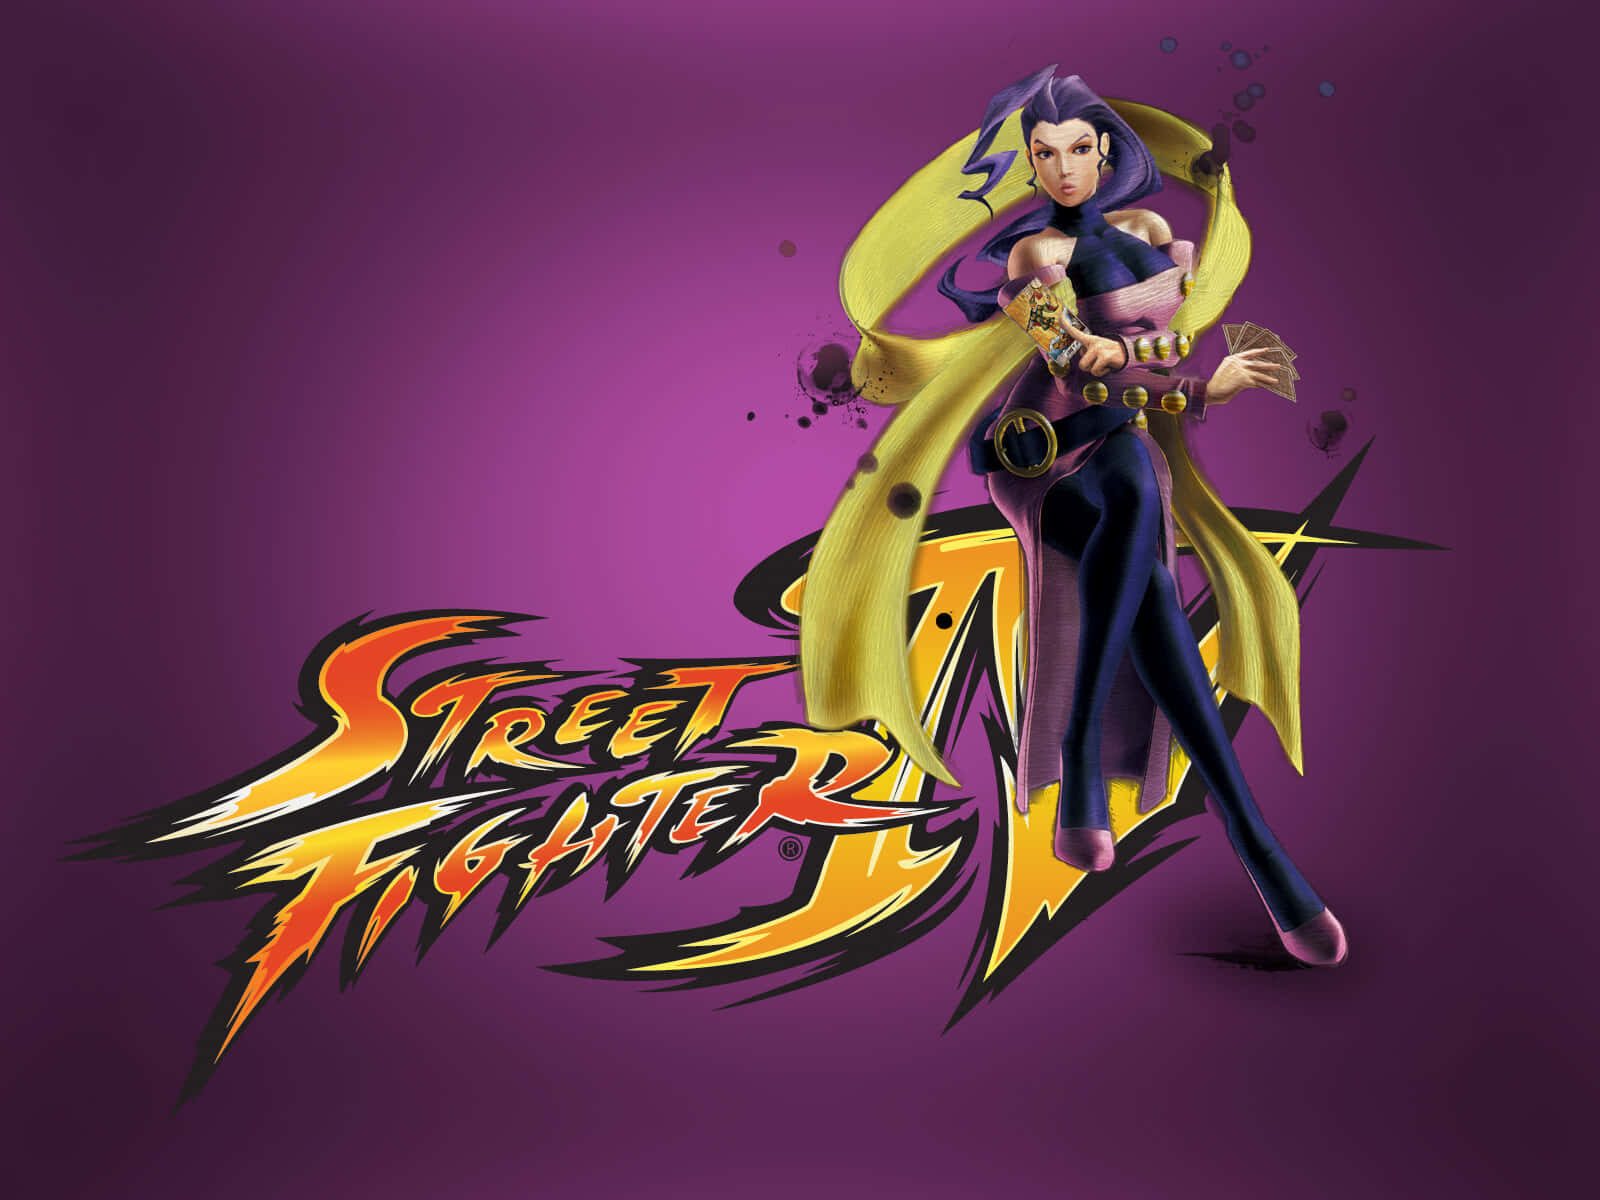 Street Fighter Rose Promotional Art Wallpaper